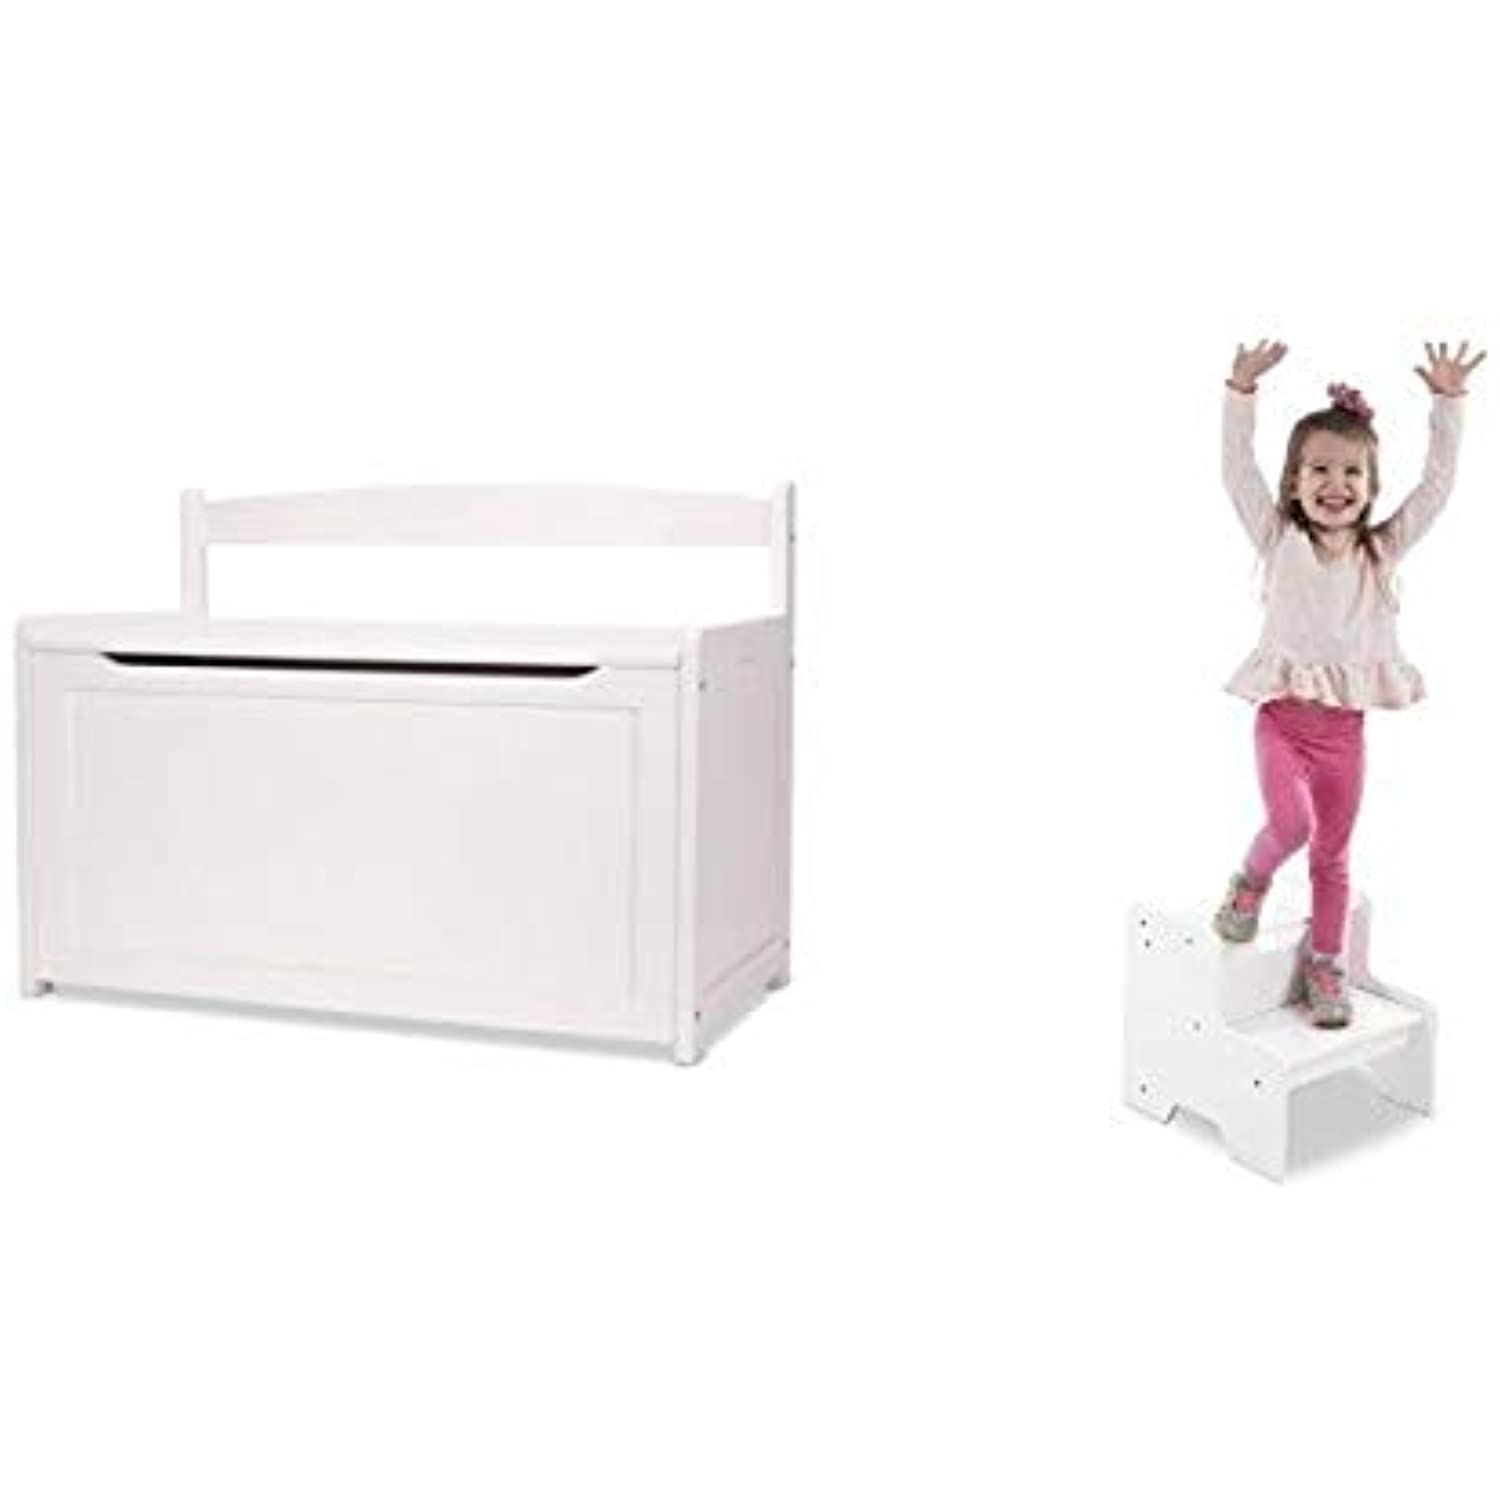 Melissa & Doug Kids White Wooden Furniture - Toy Chest, Step Stool